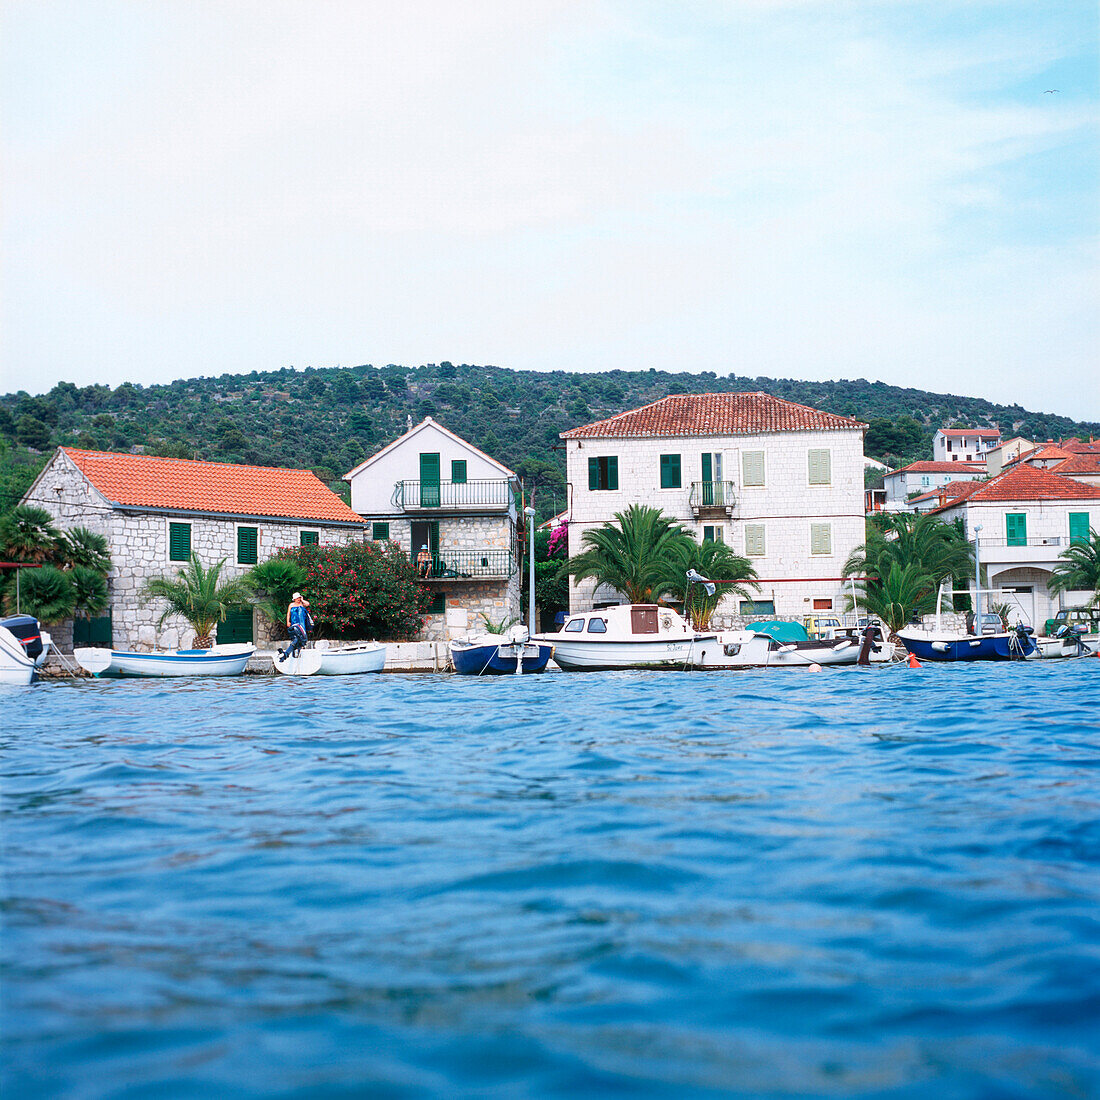 View over Adriatic Sea to old stone houses and small boats, Stari Grad, Hvar, Dalmatia, Croatia